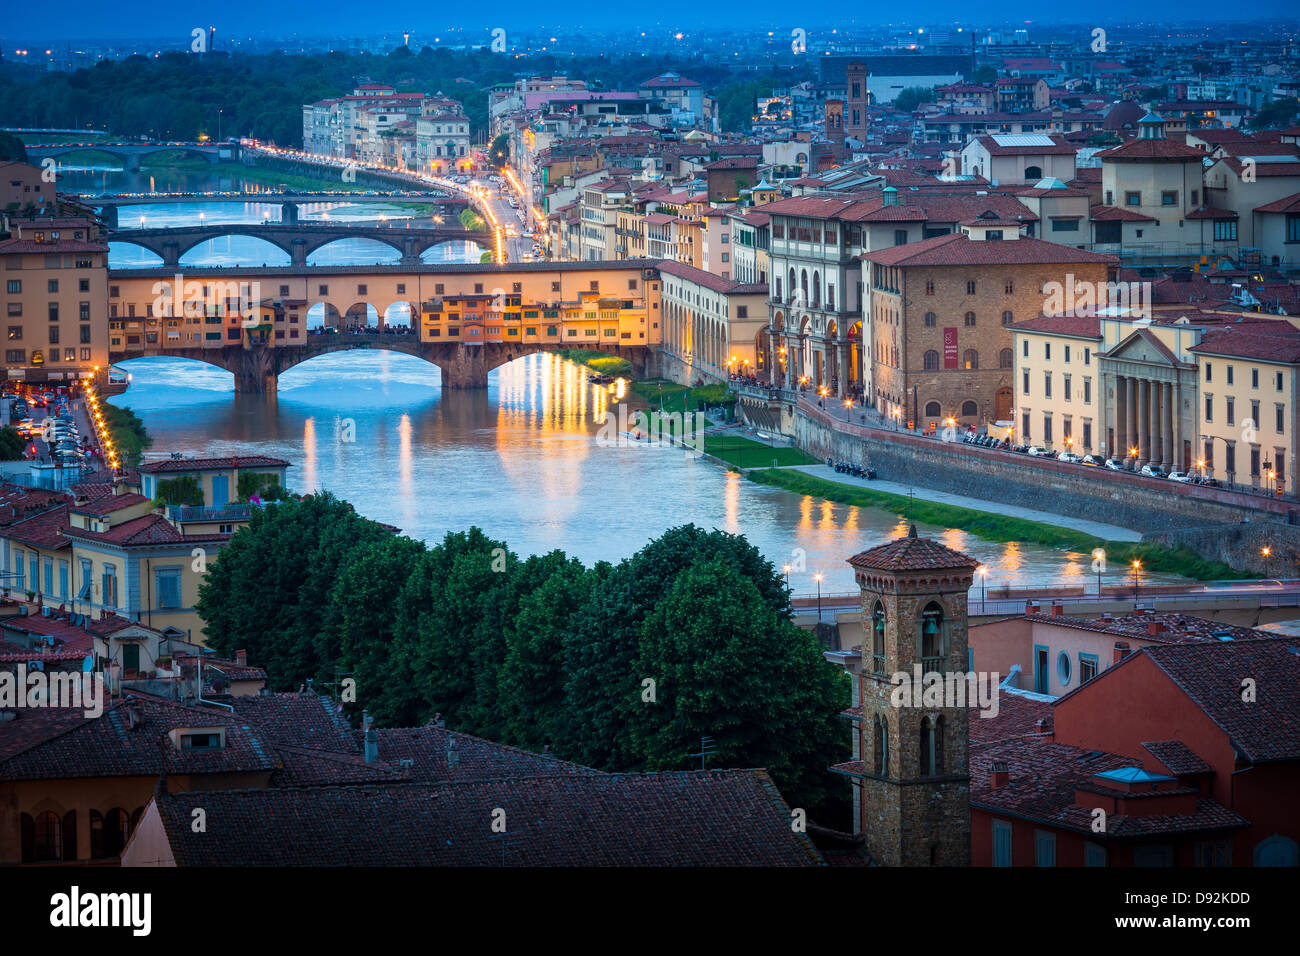 The river Arno and Ponte Vecchio bridge in Firenze (Florence), Italy Stock Photo